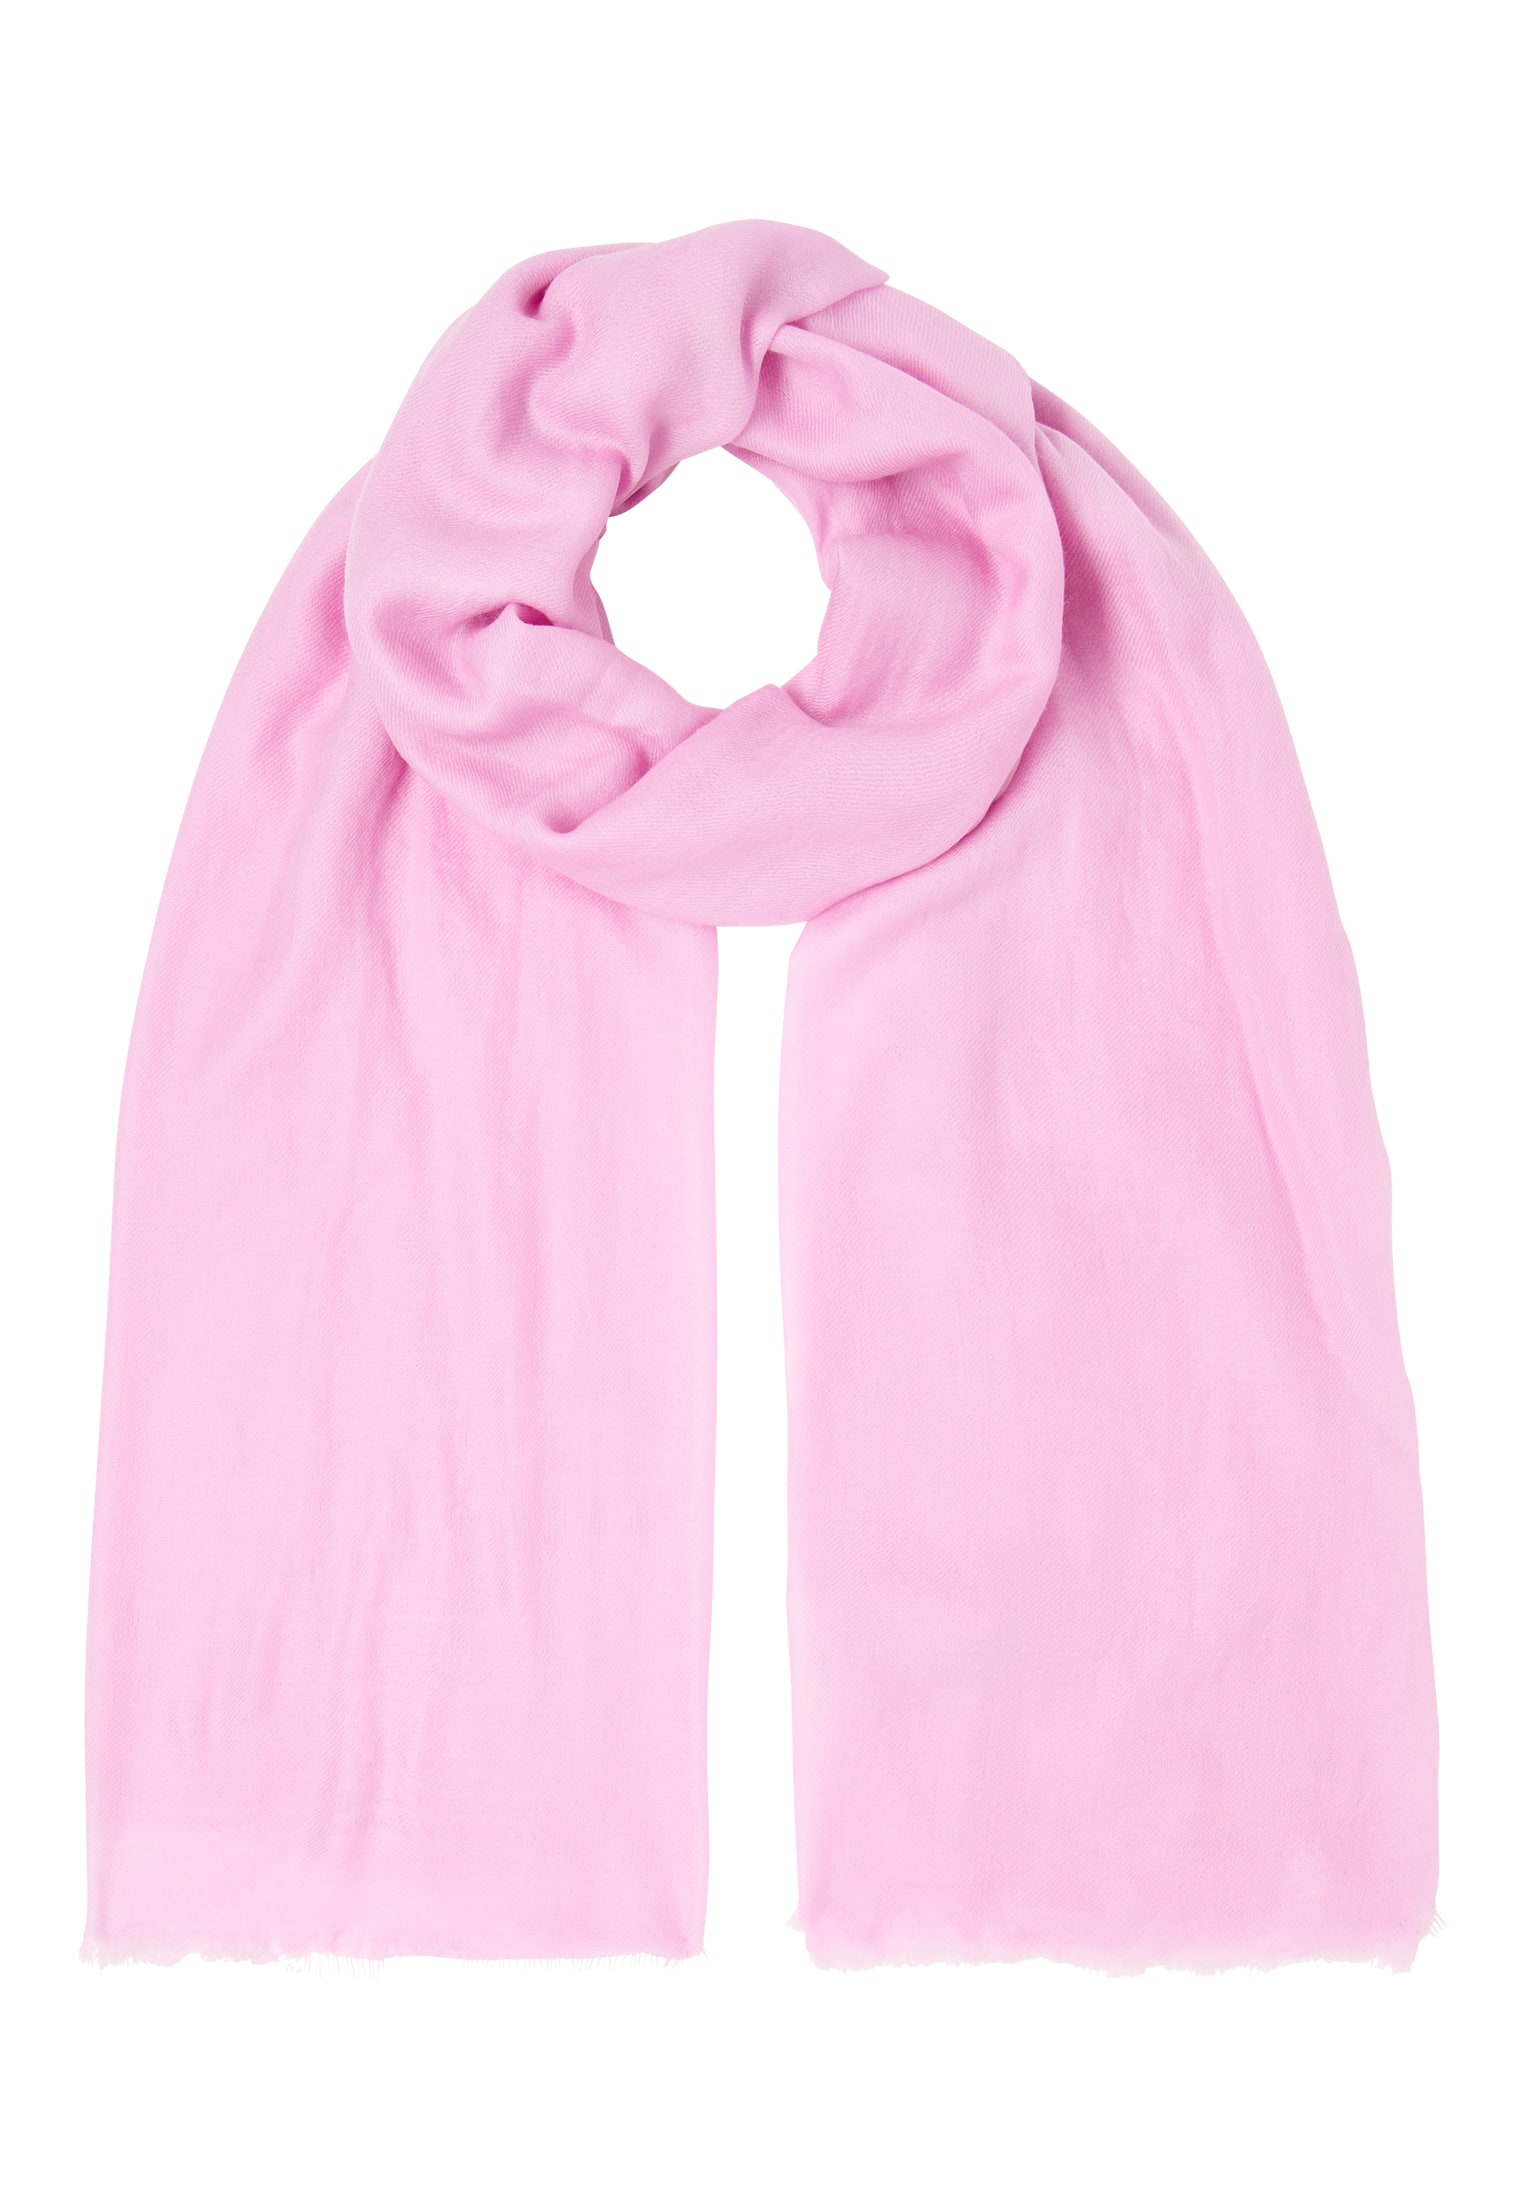 in pink | soft OS pink 2AC00067-15-12-OS | unifarben | Schal soft